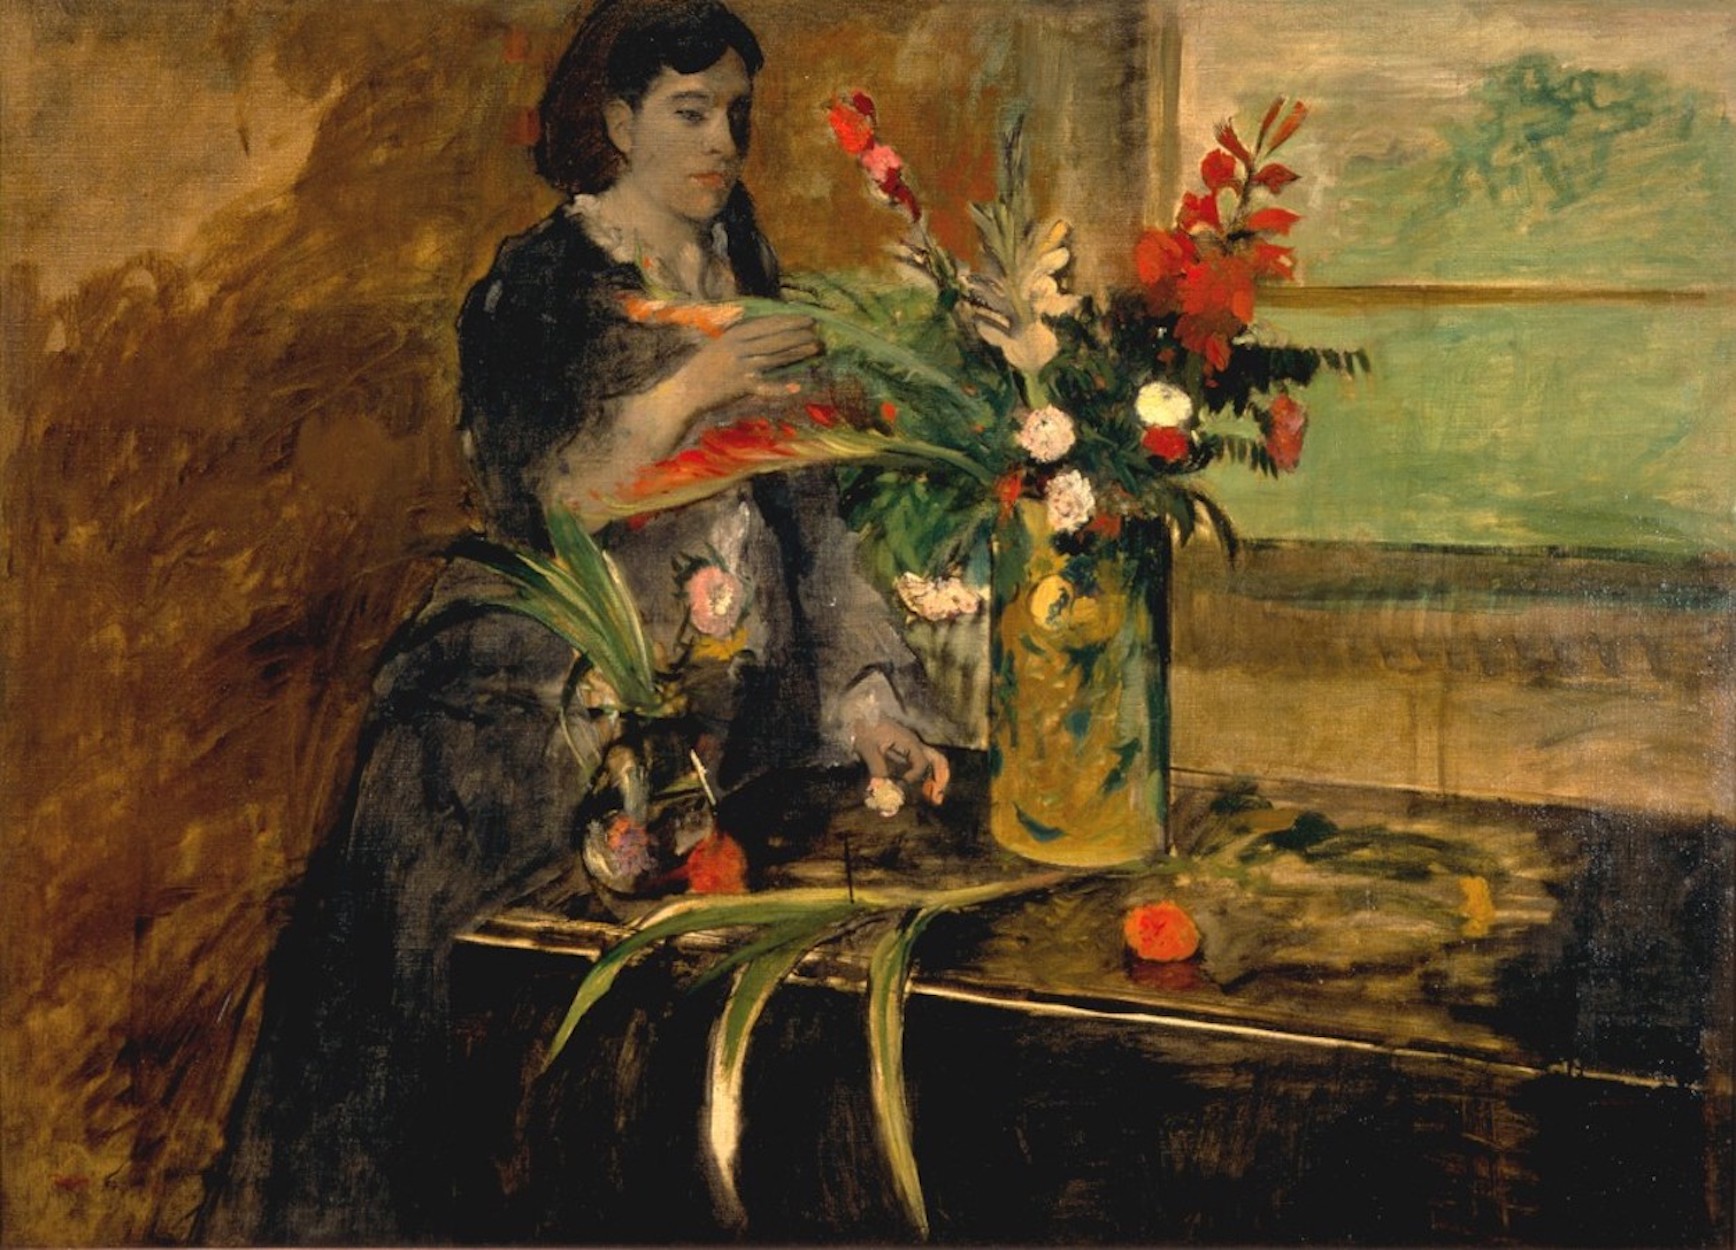 بورتريه لإسيتل موسون ديغا by Edgar Degas - 1872 - 121.92 في 160.02 سم 